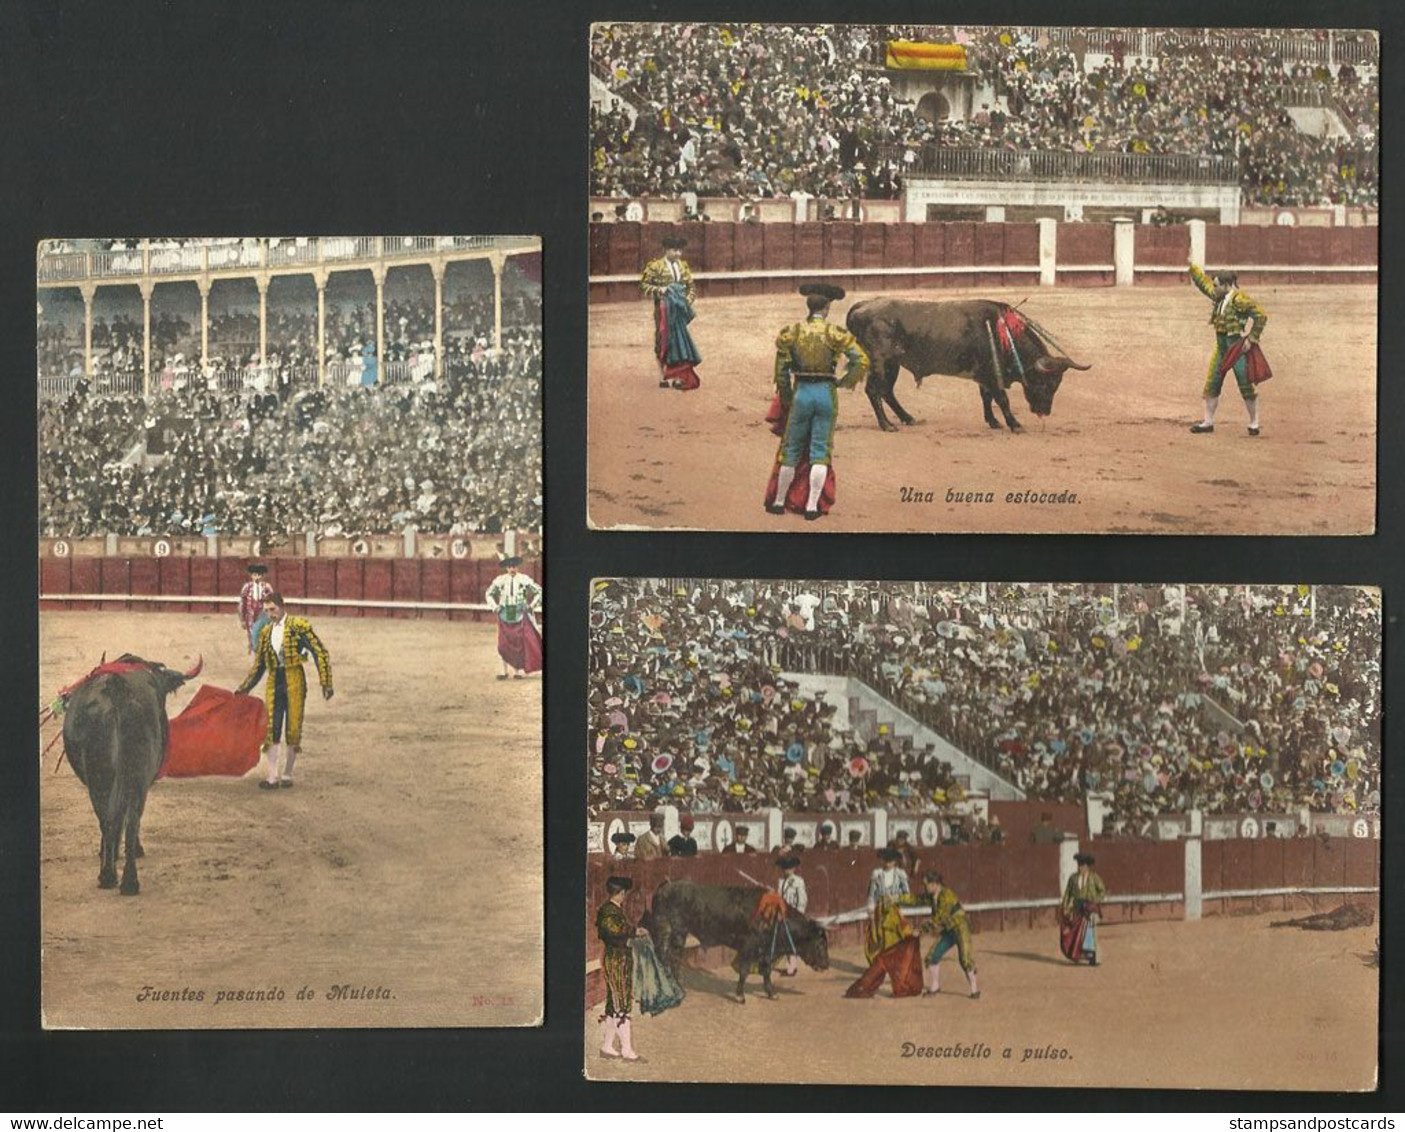 Espagne España 15 CPA cartes postales Corrida Tauromachie Taureau 15 old postcards Bullfight Bull Spain